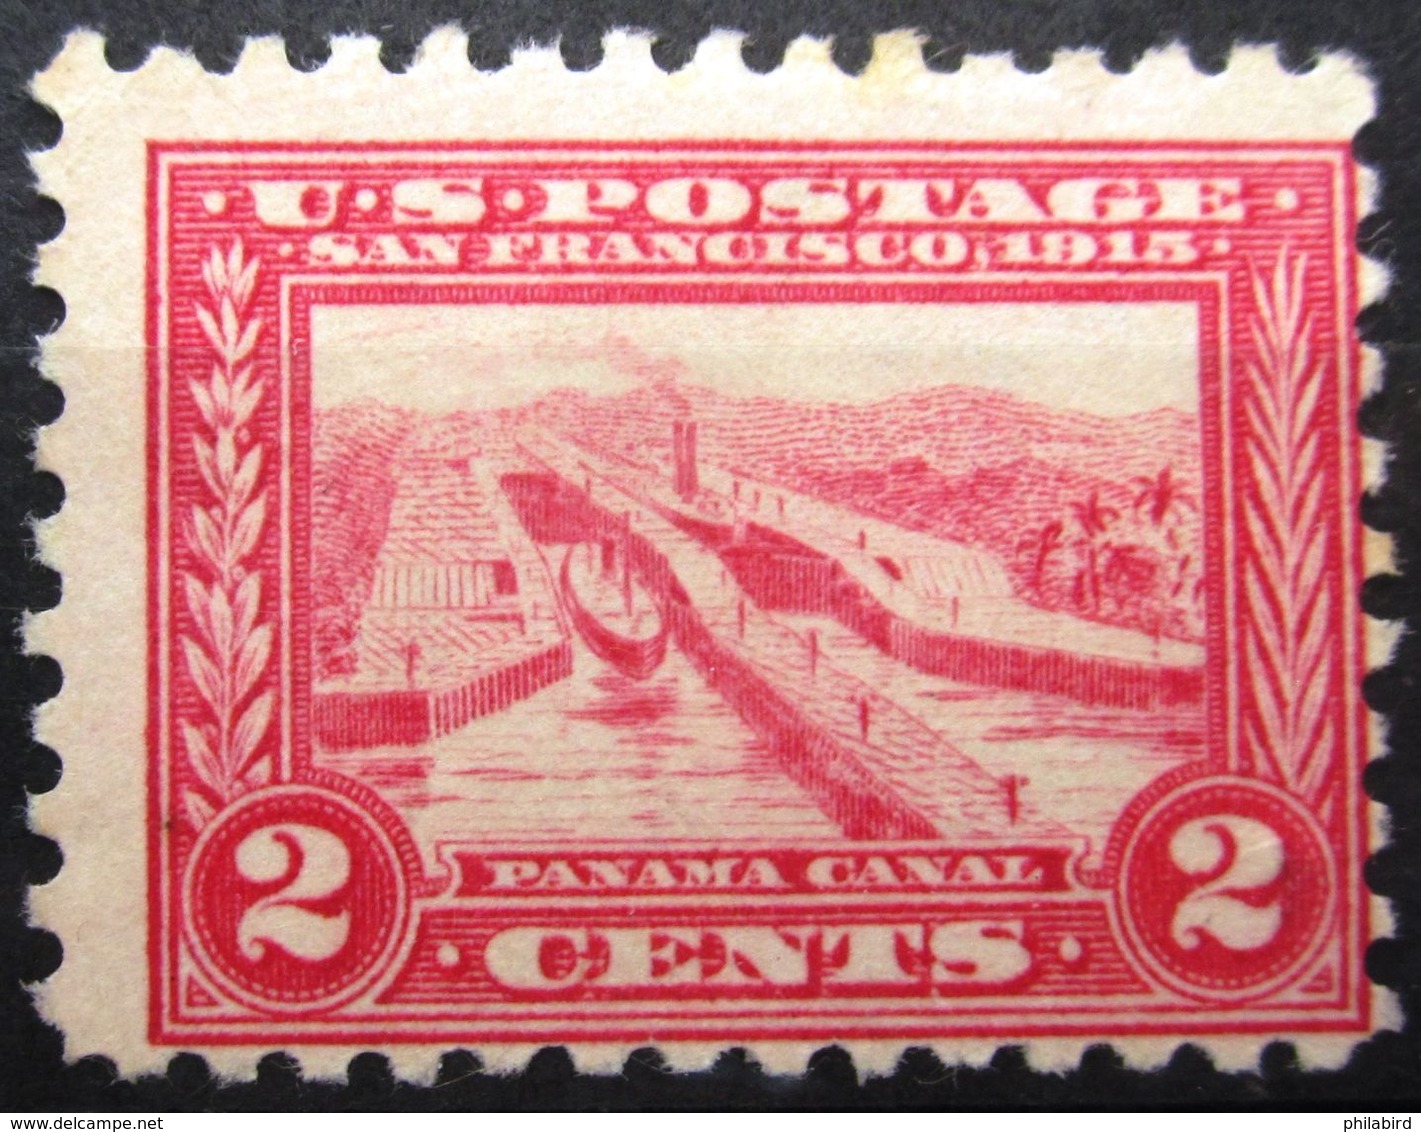 ETATS-UNIS              N° 196B                NEUF SANS GOMME - Unused Stamps